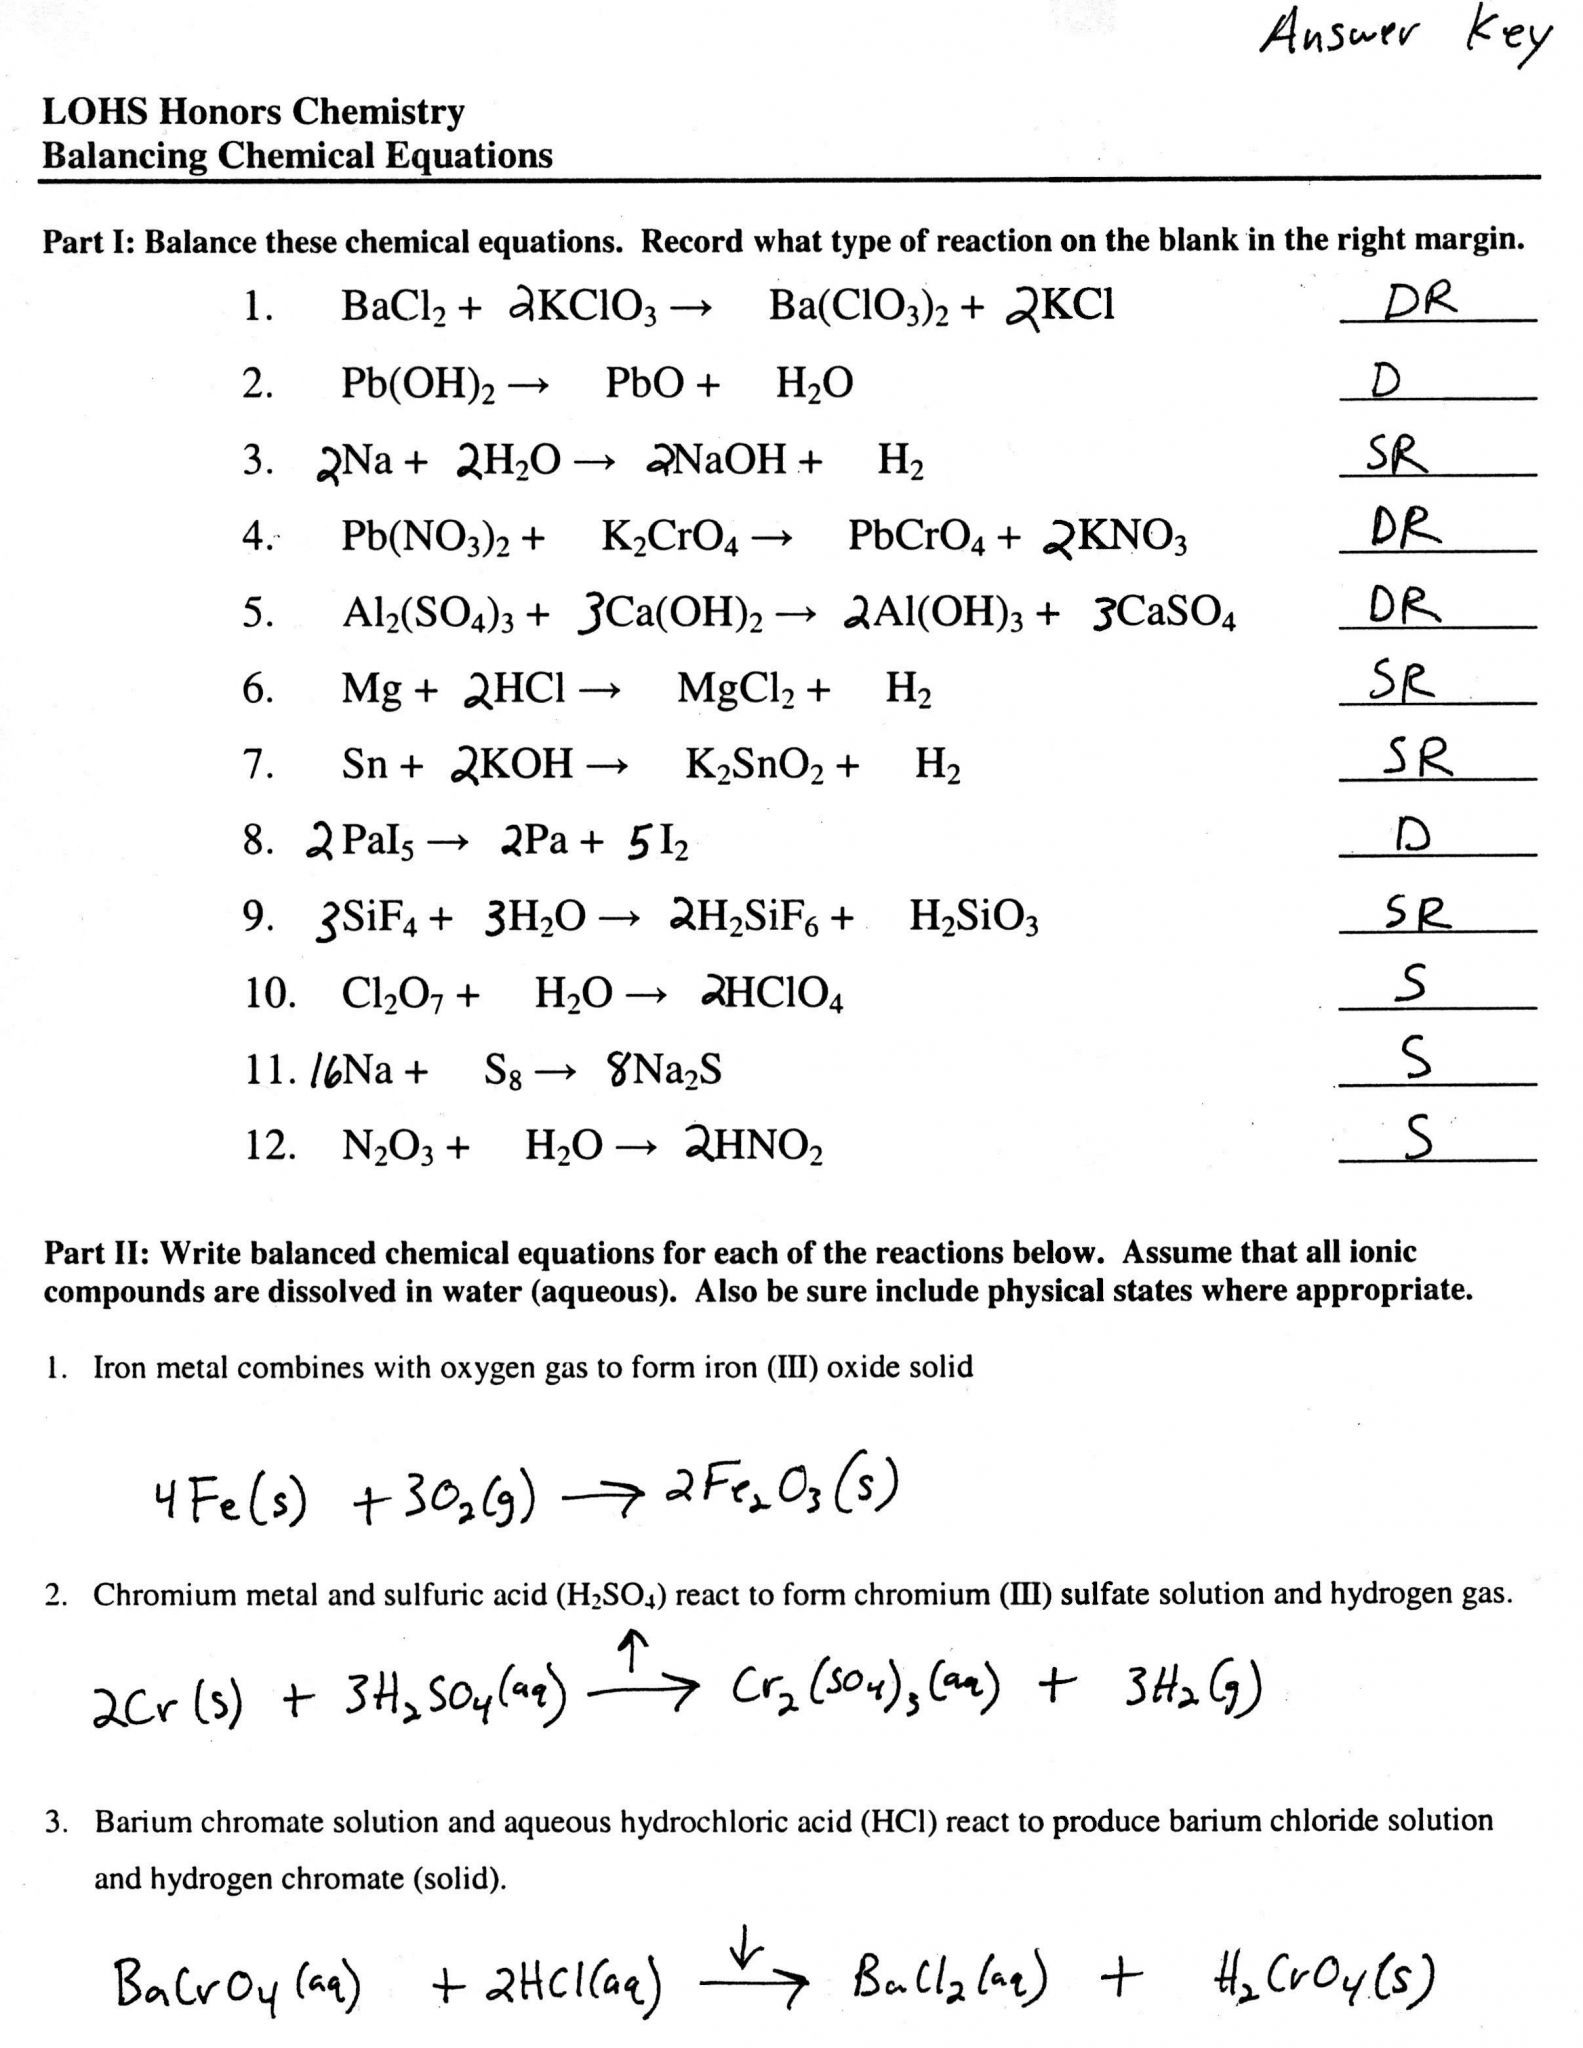 balancing chemical equations worksheet class 10 cbse